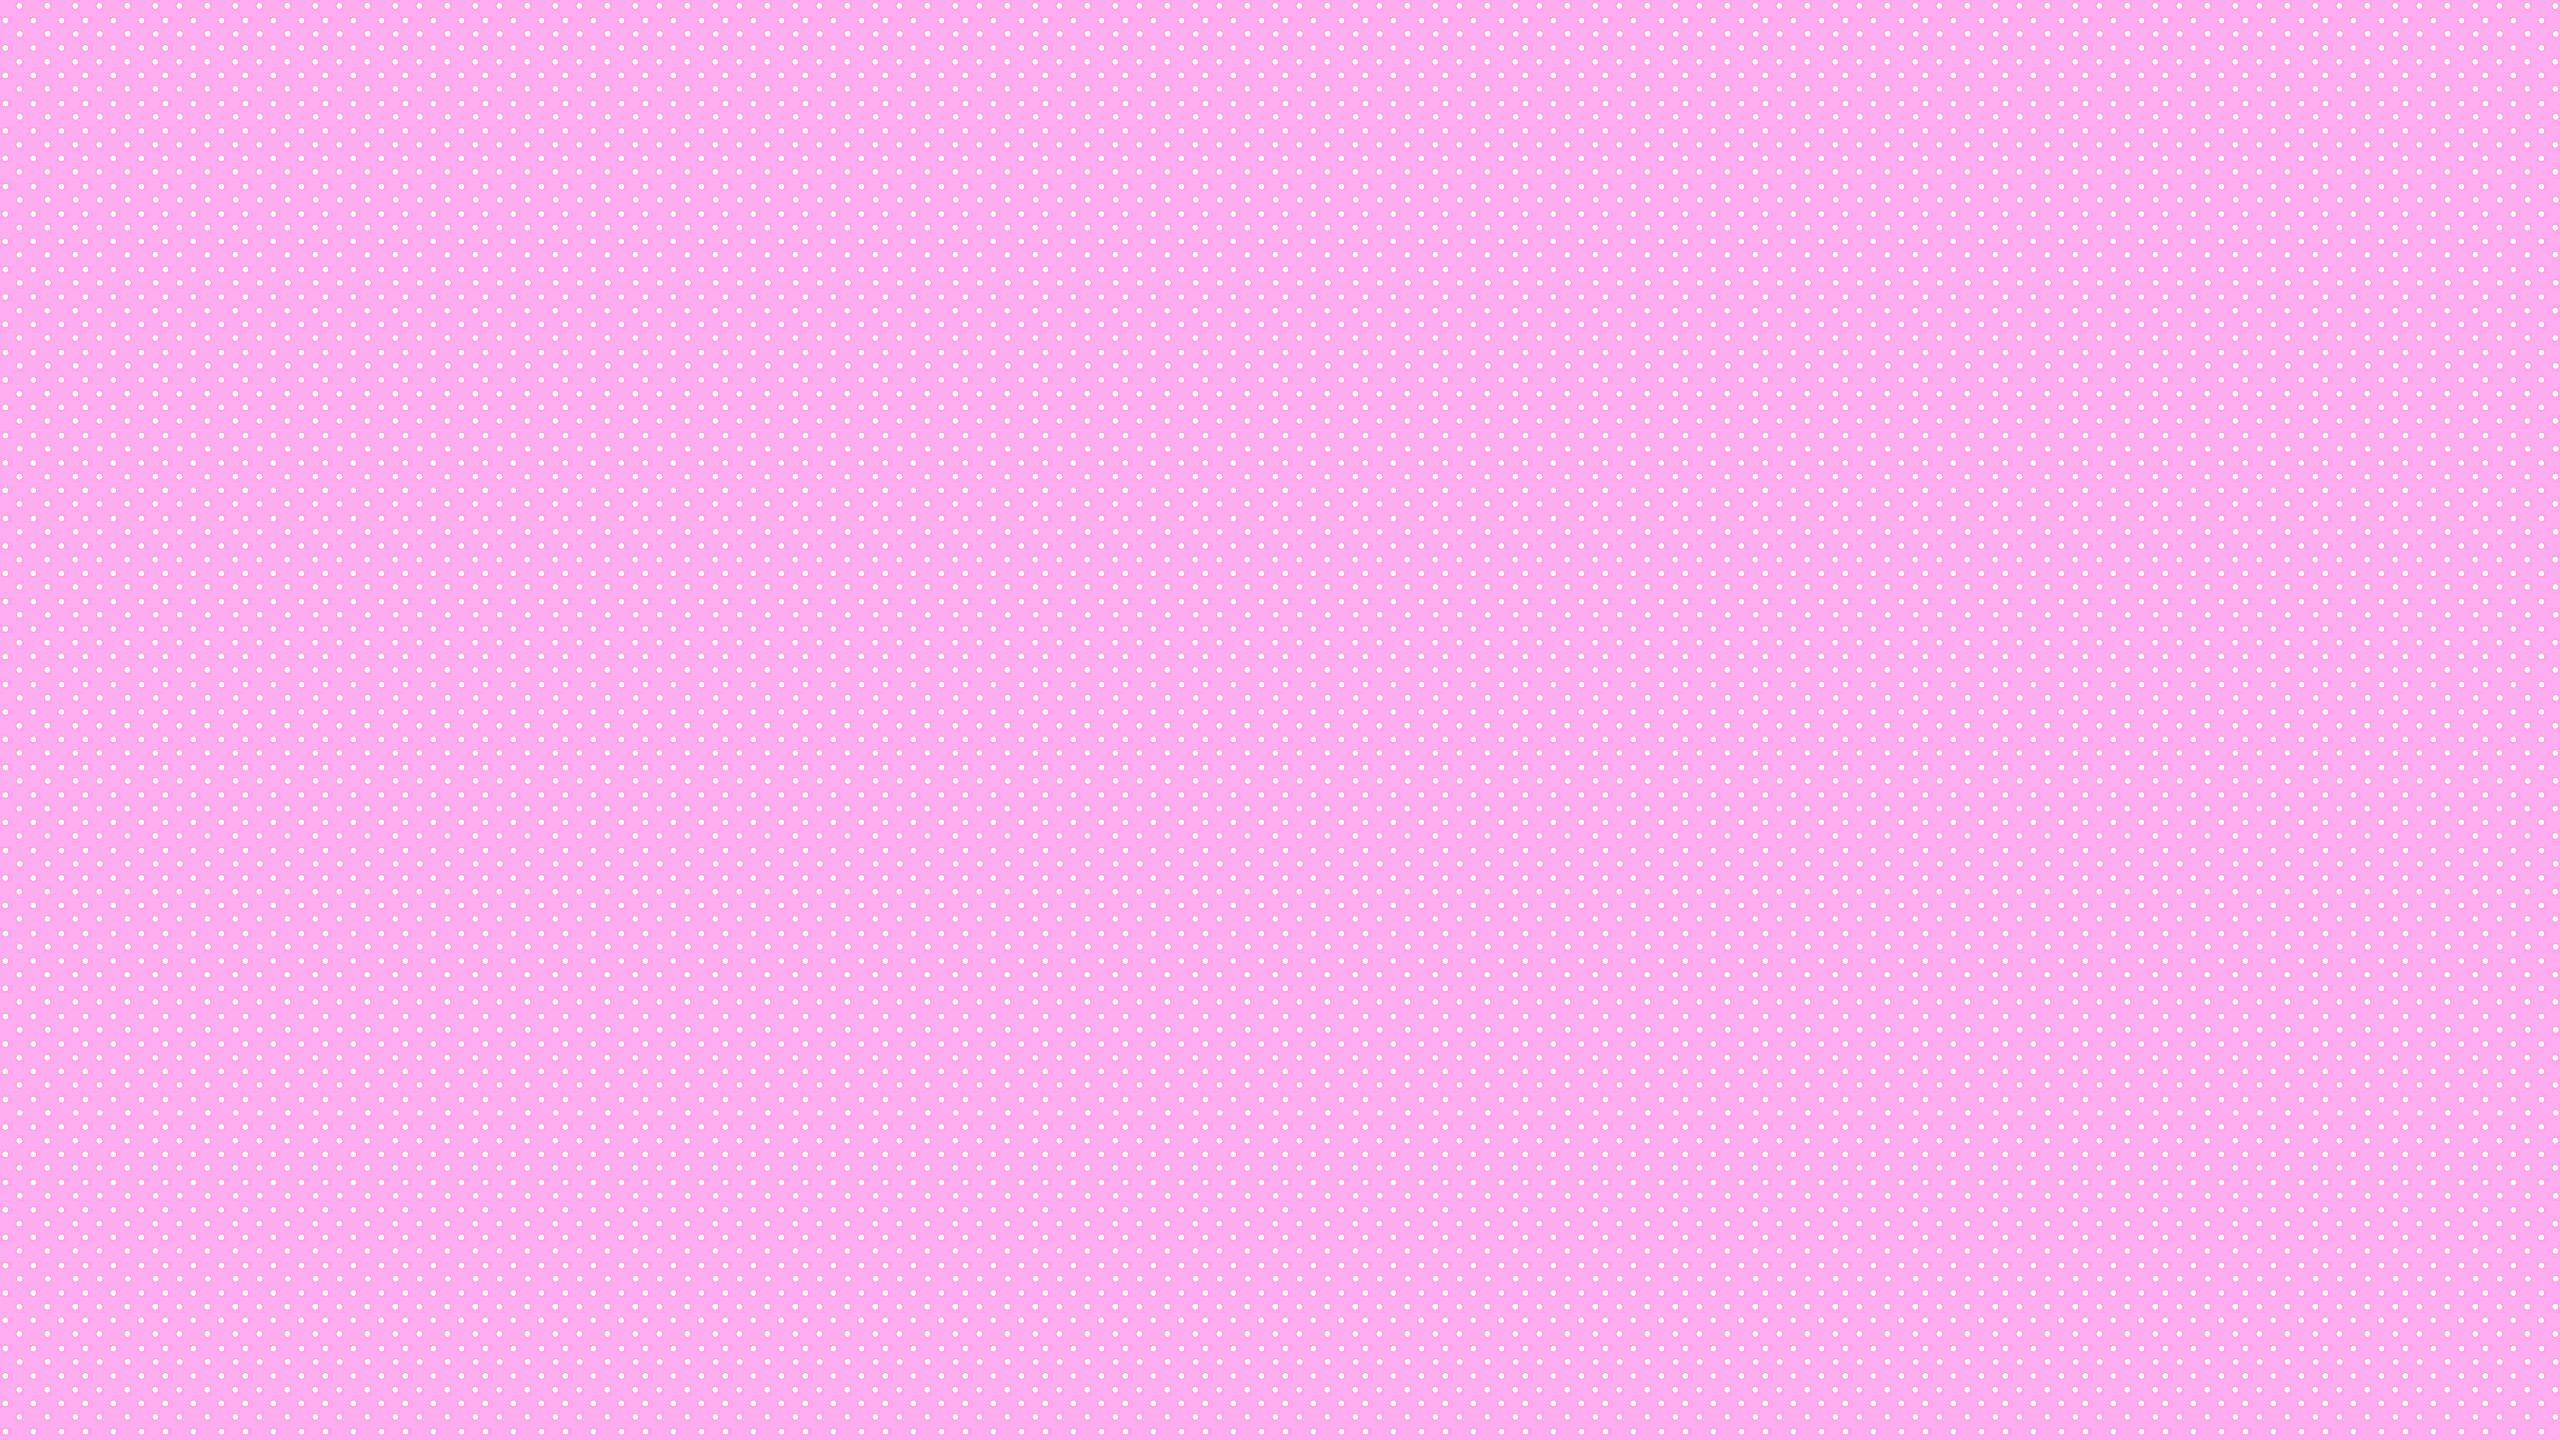 Pastel Tumblr backgroundDownload free HD wallpaper